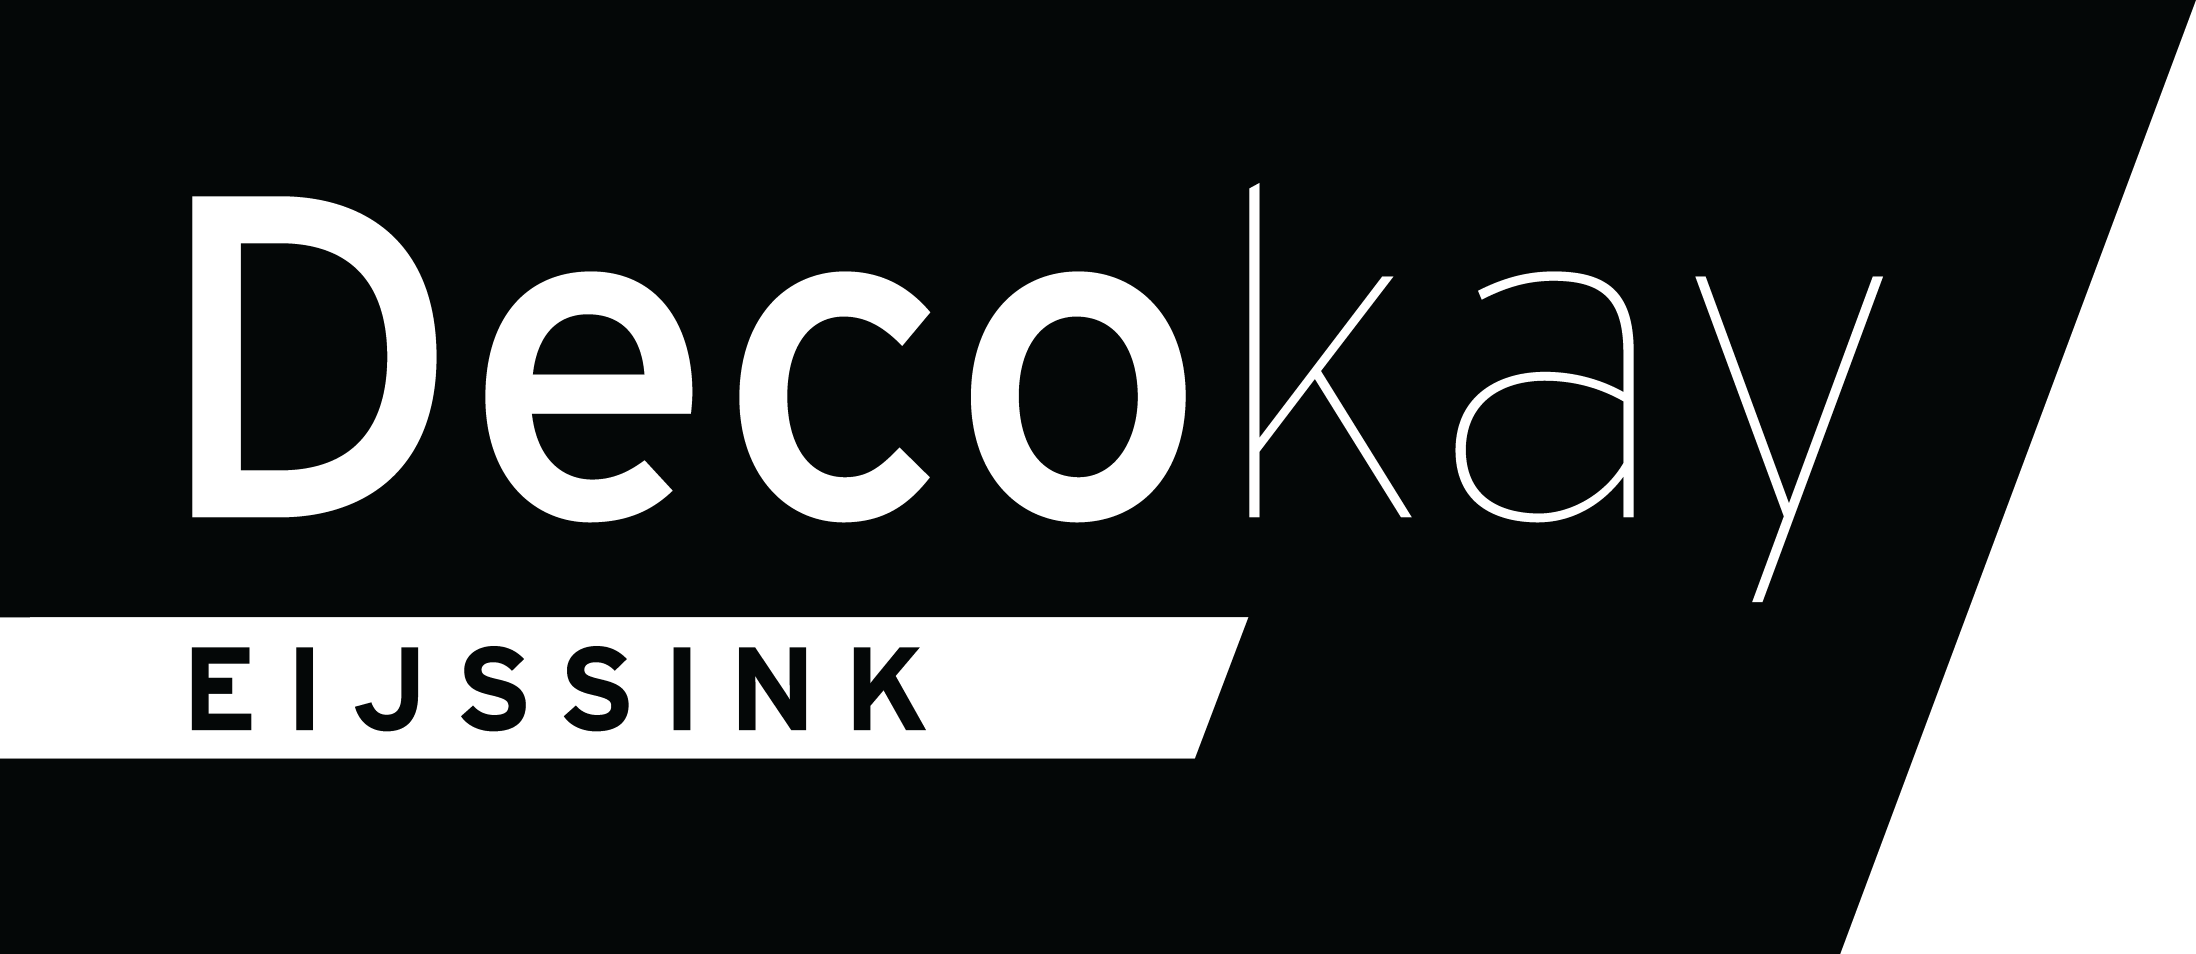 Logo Decokay Eijssink